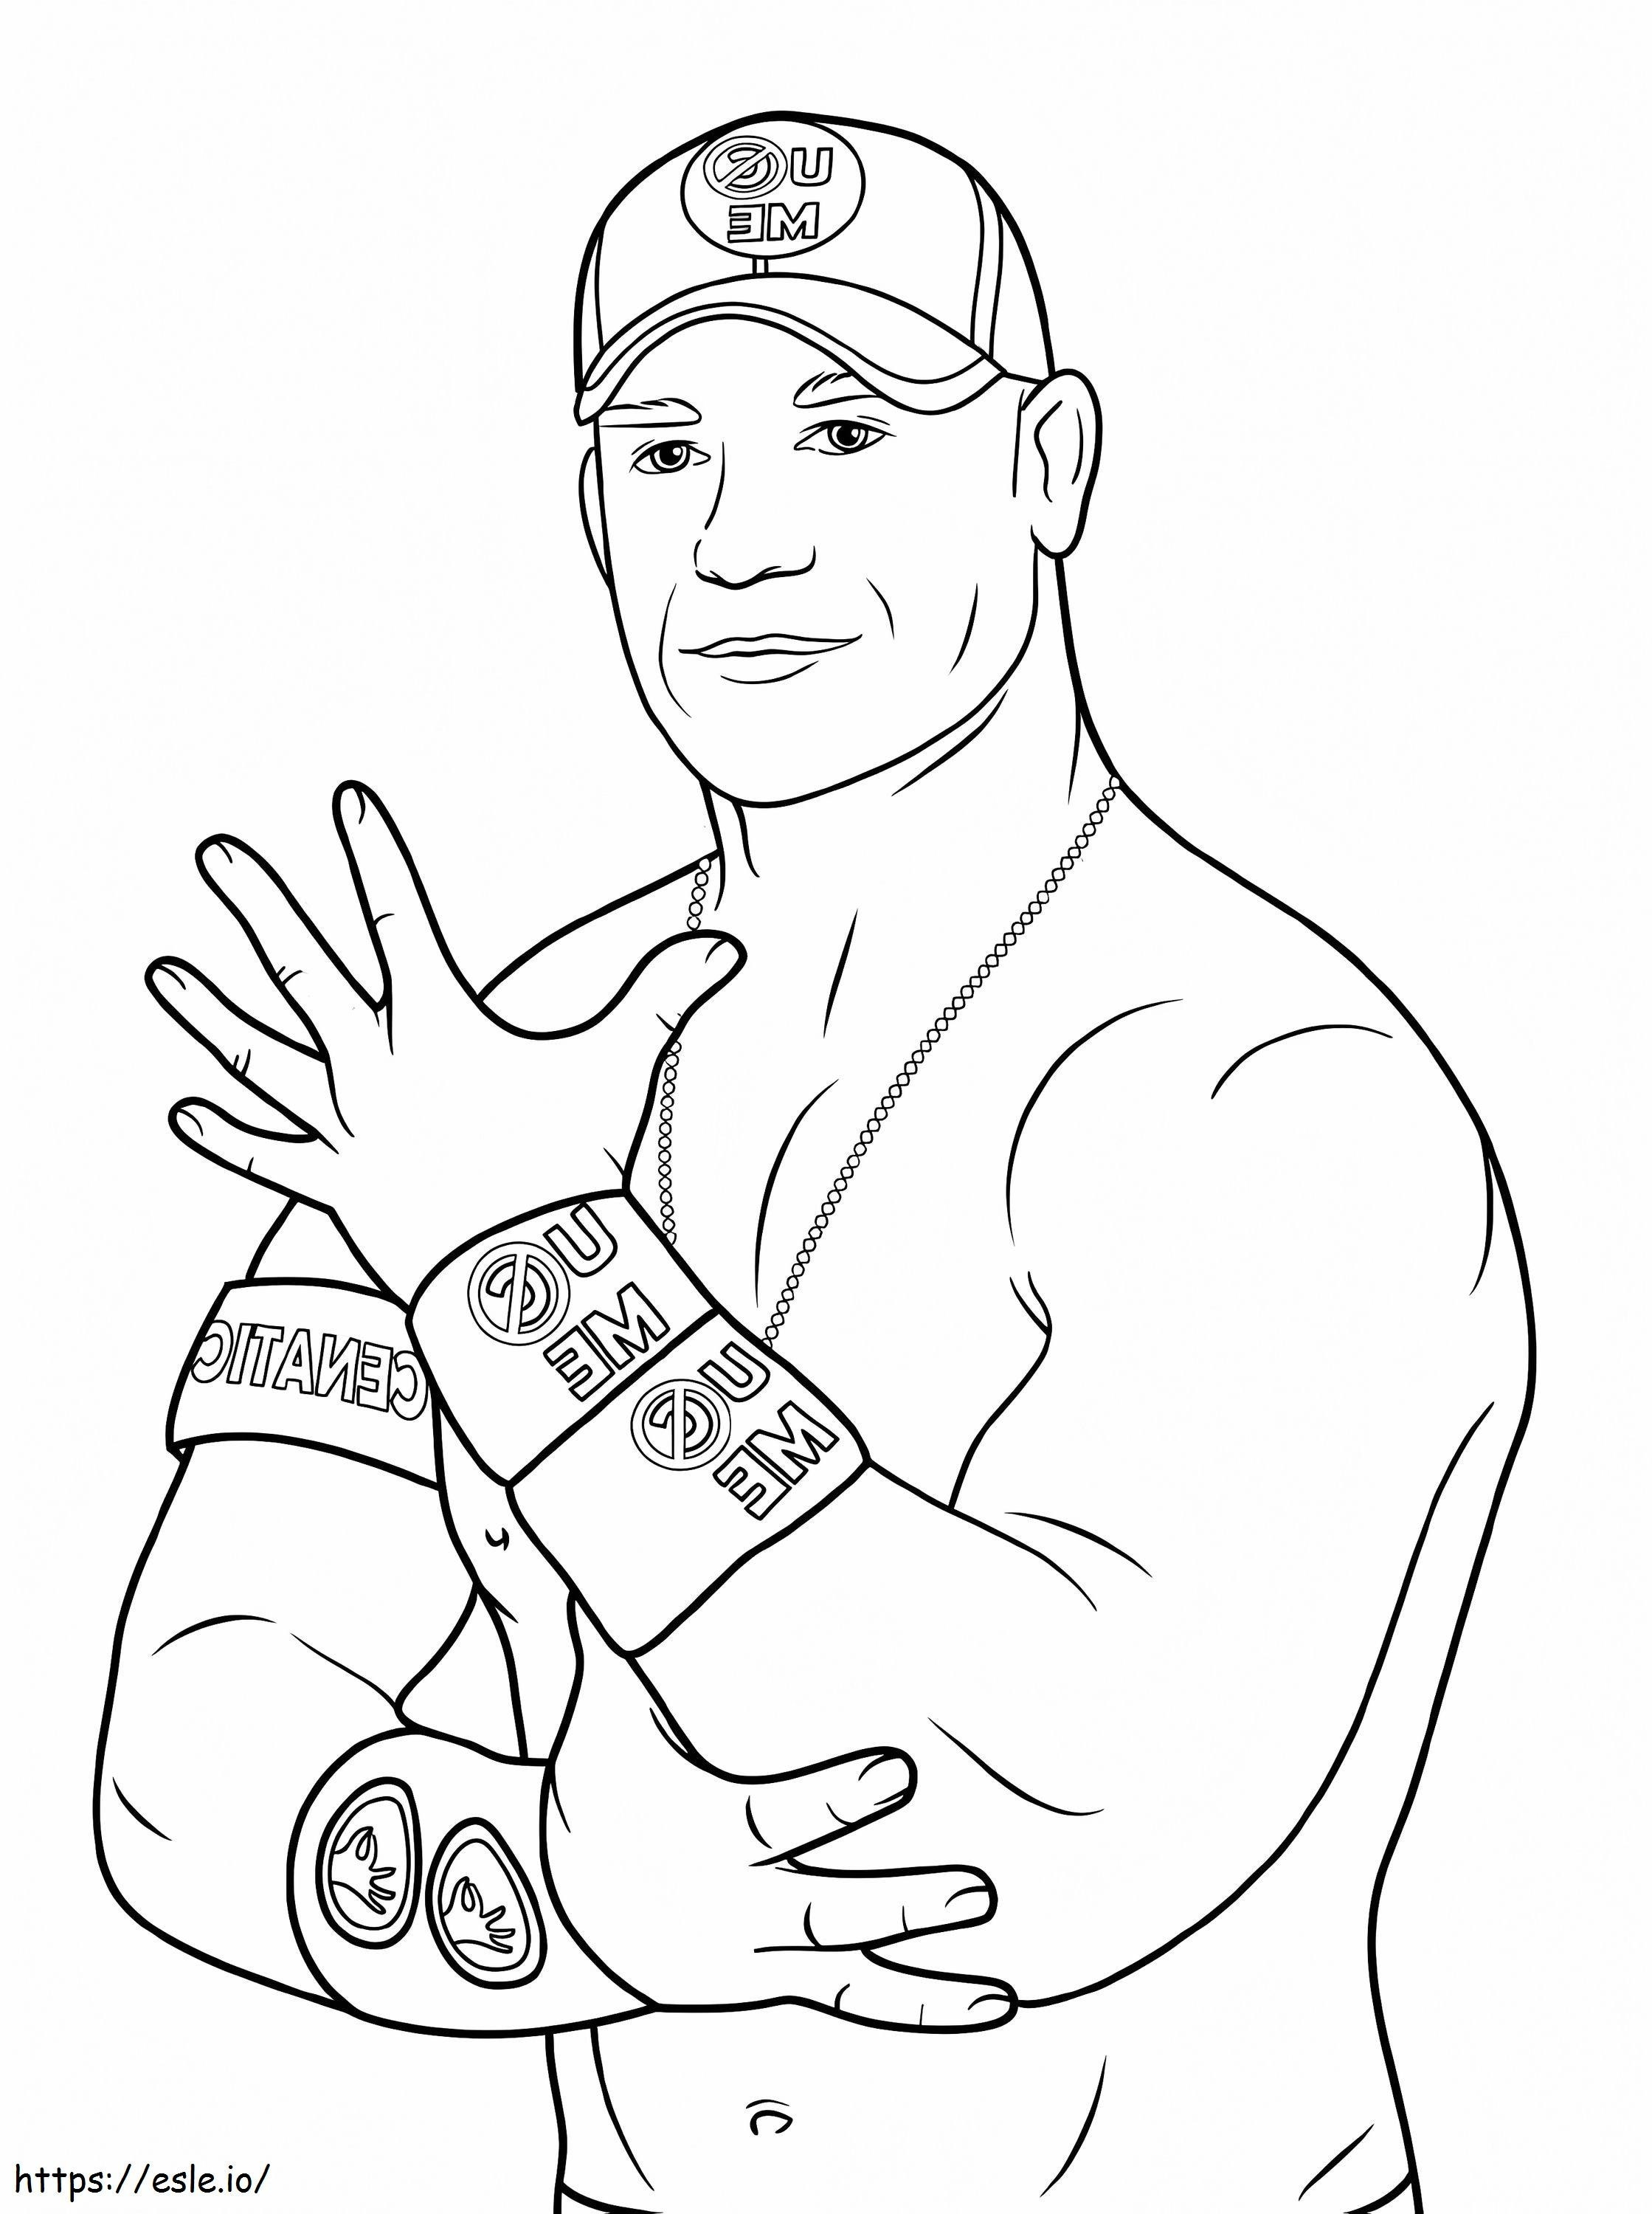 Coloriage WWEJohn Cena à imprimer dessin